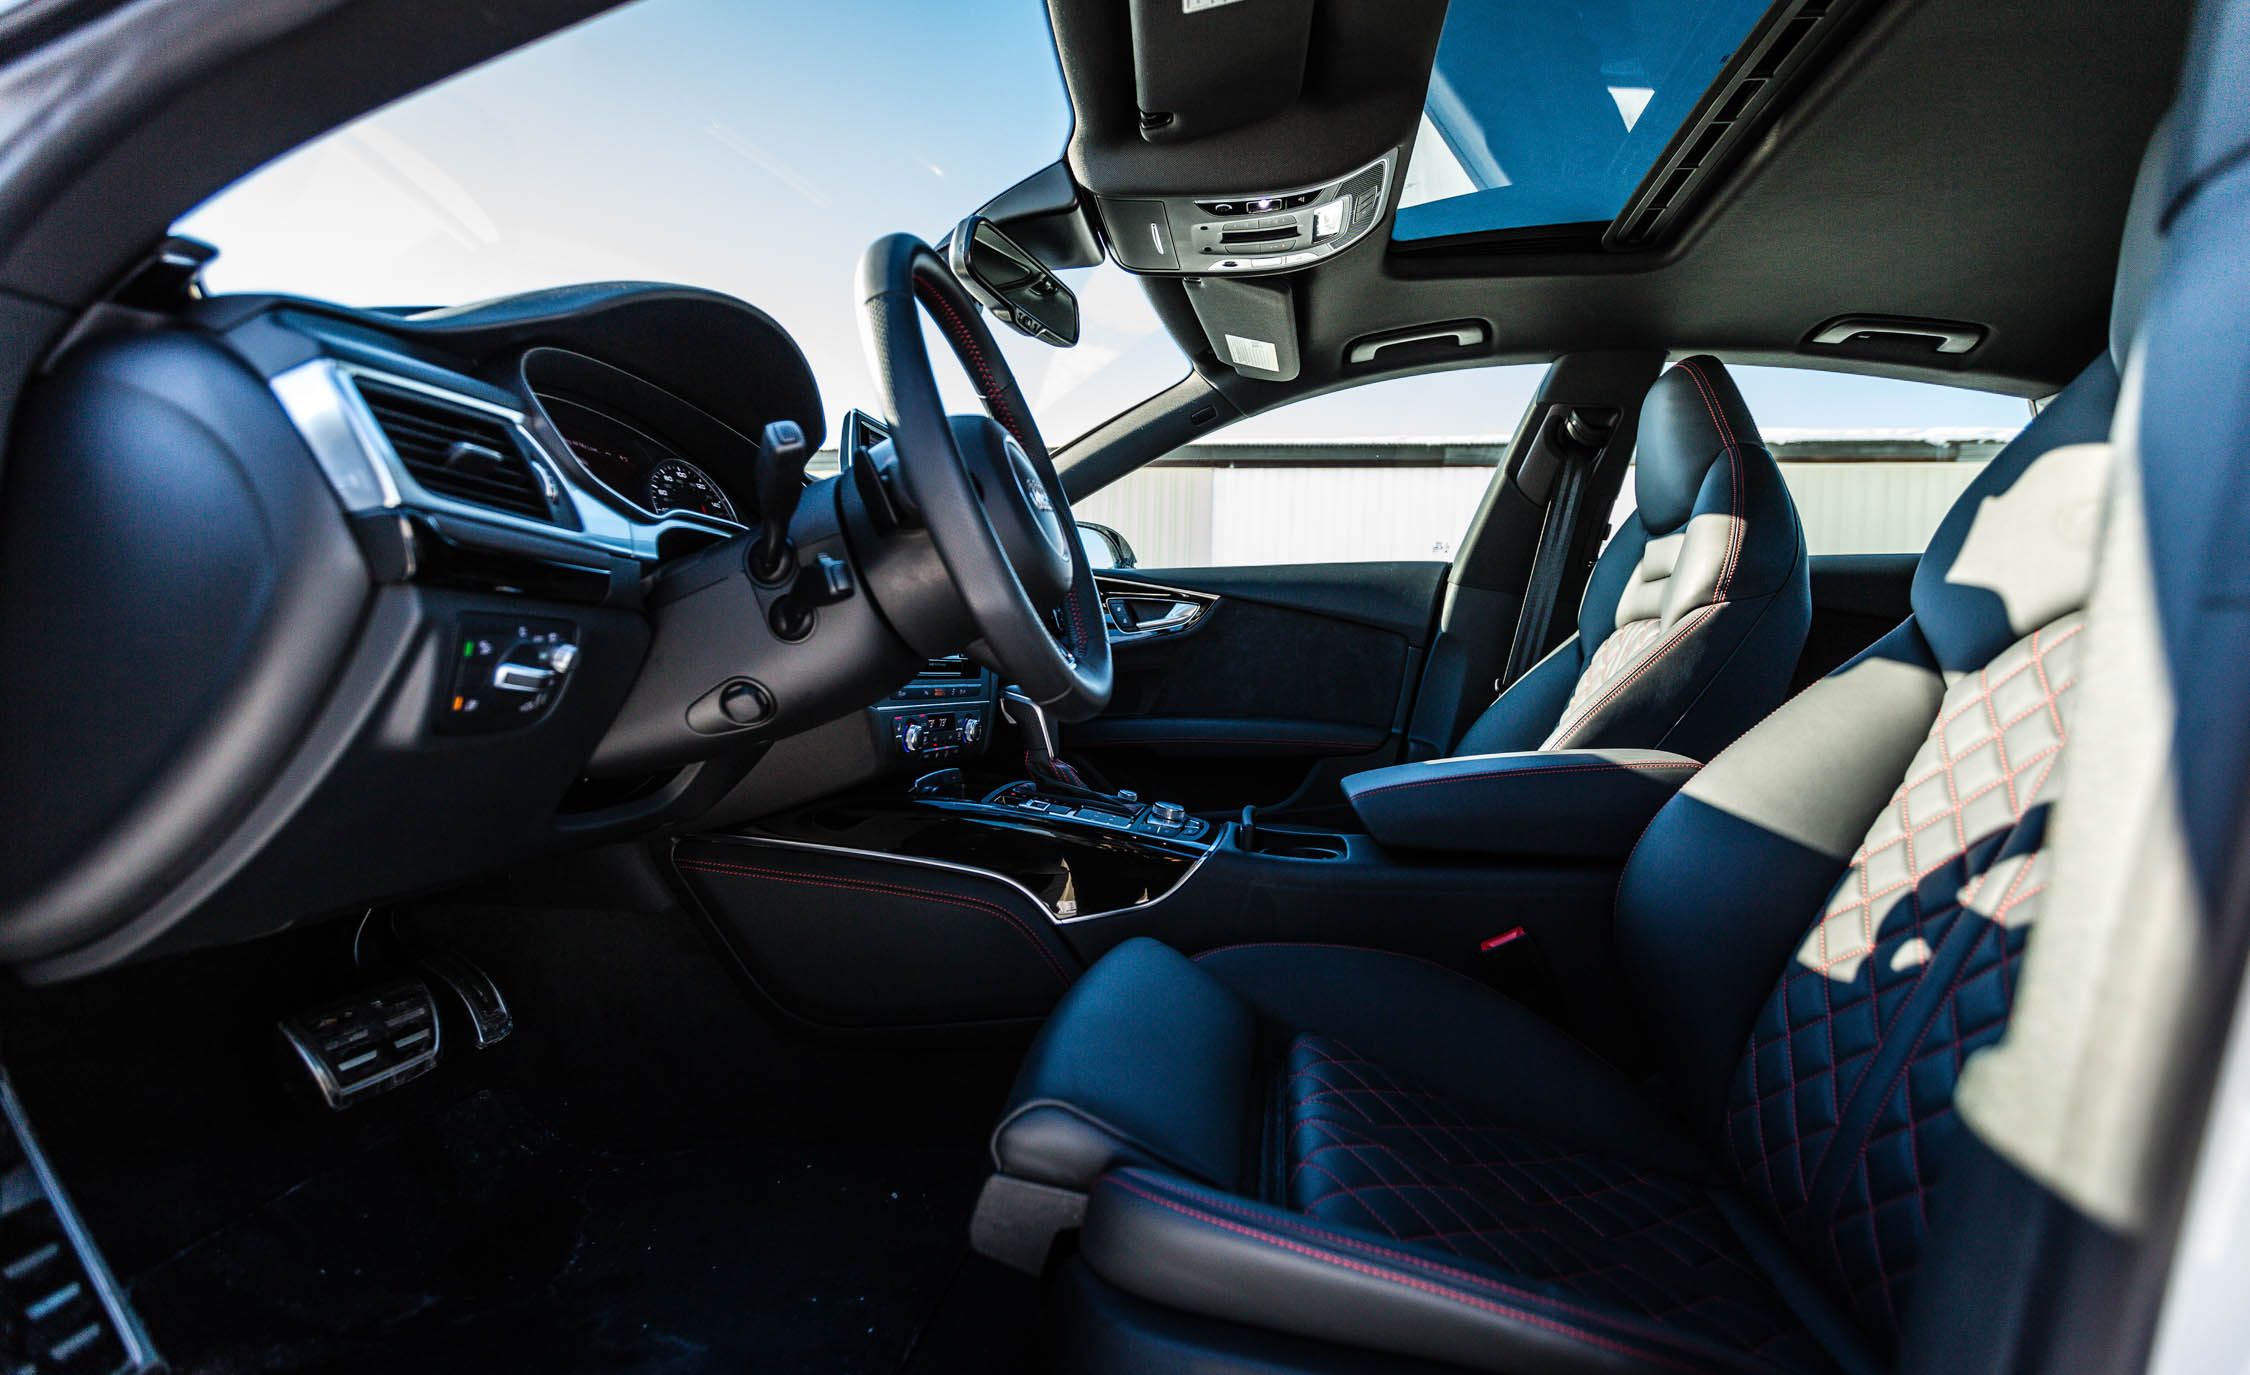 2017 Audi A7 Interior Driver Cockpit (View 5 of 24)